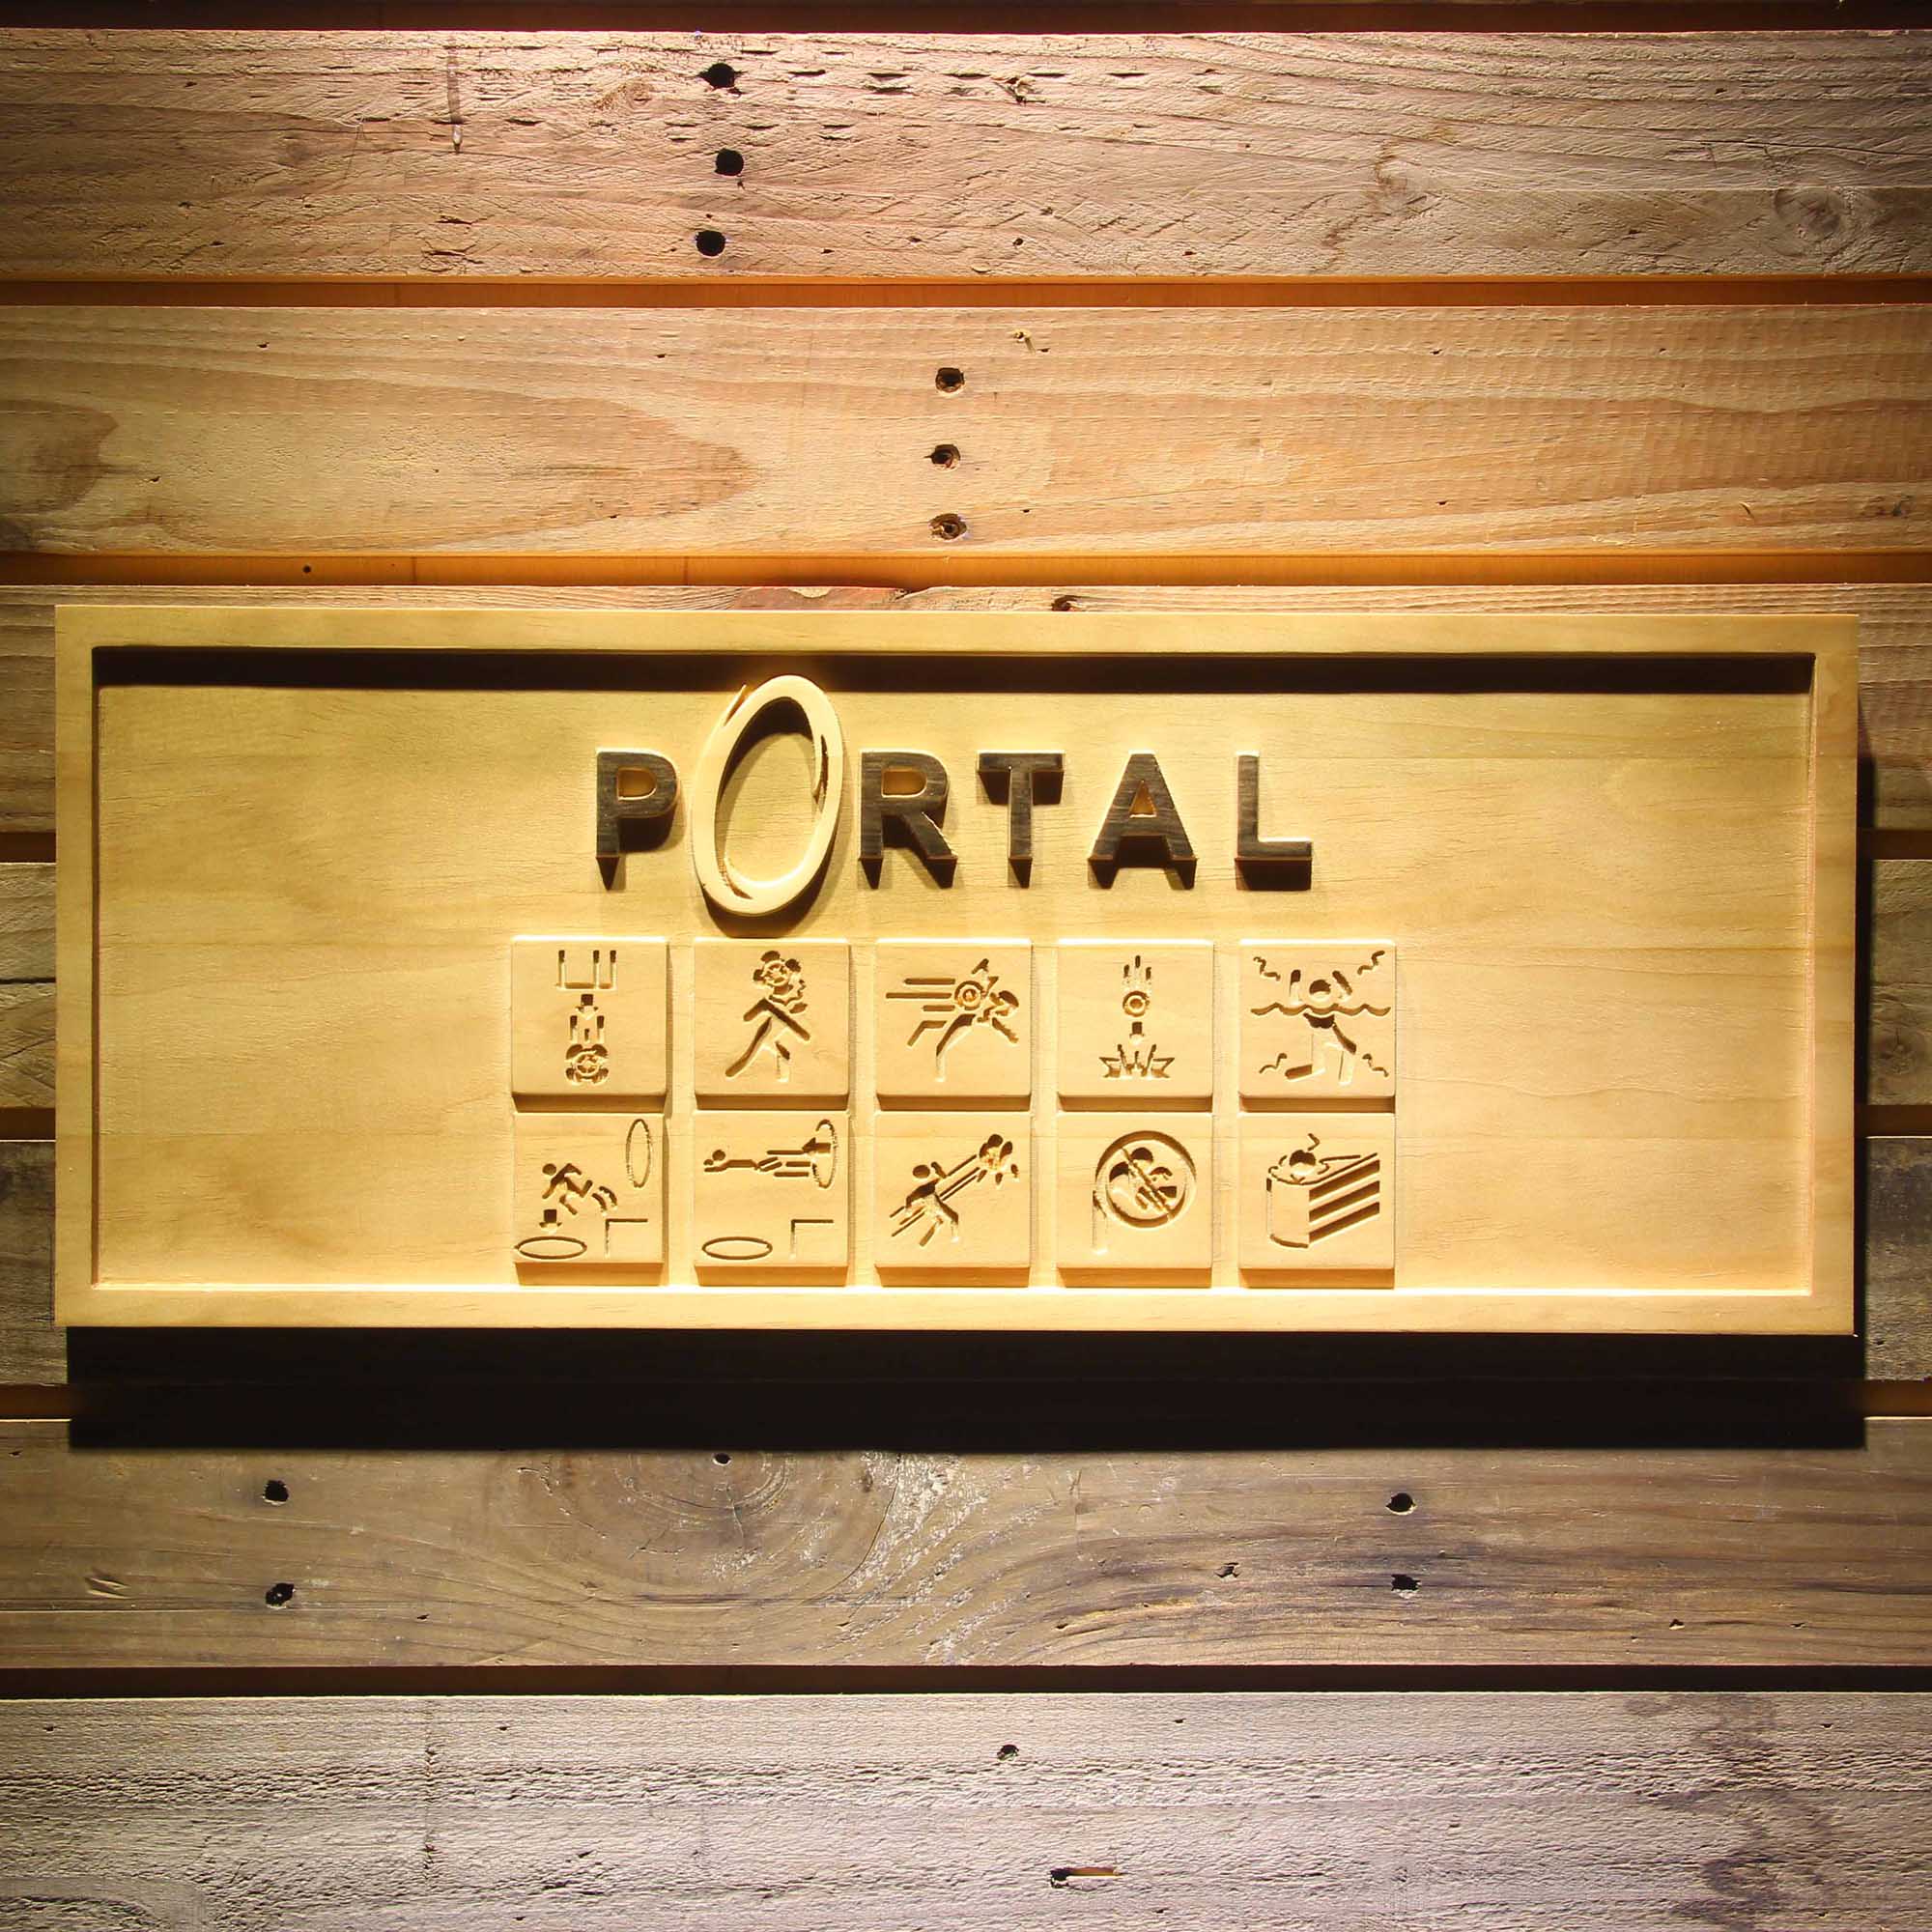 Portal Game Room 3D Wooden Engrave Sign